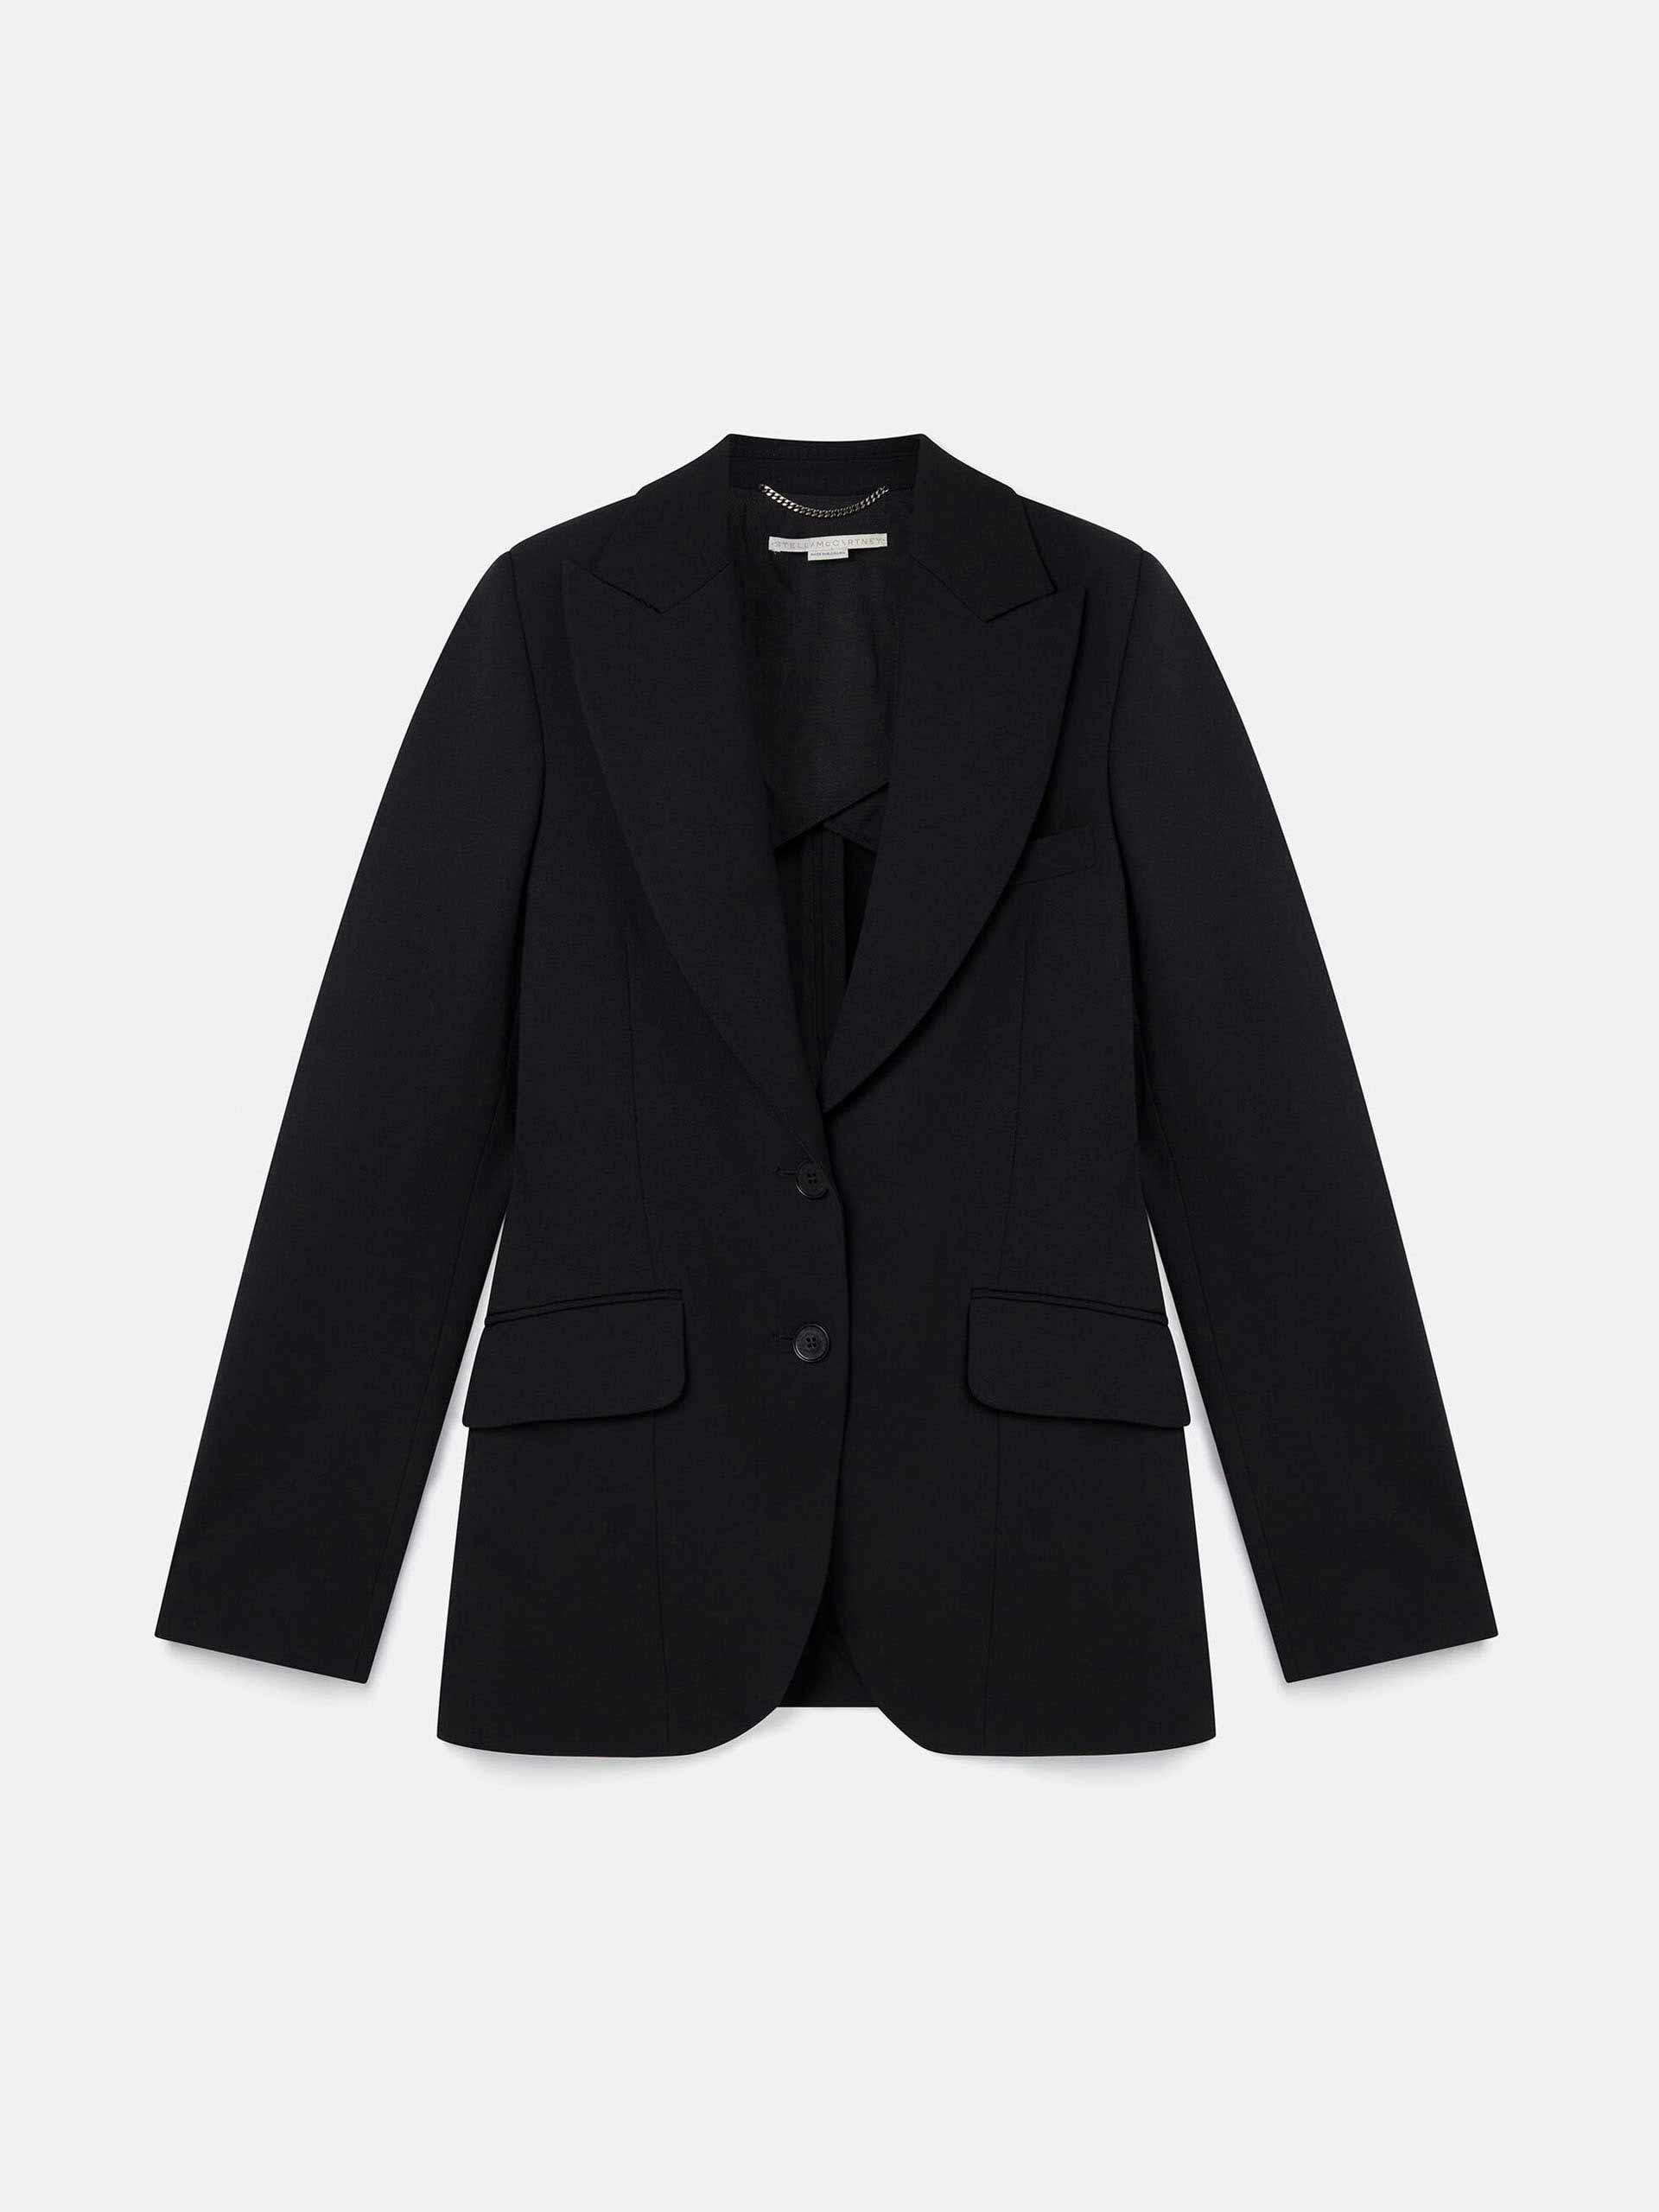 Black tailored blazer